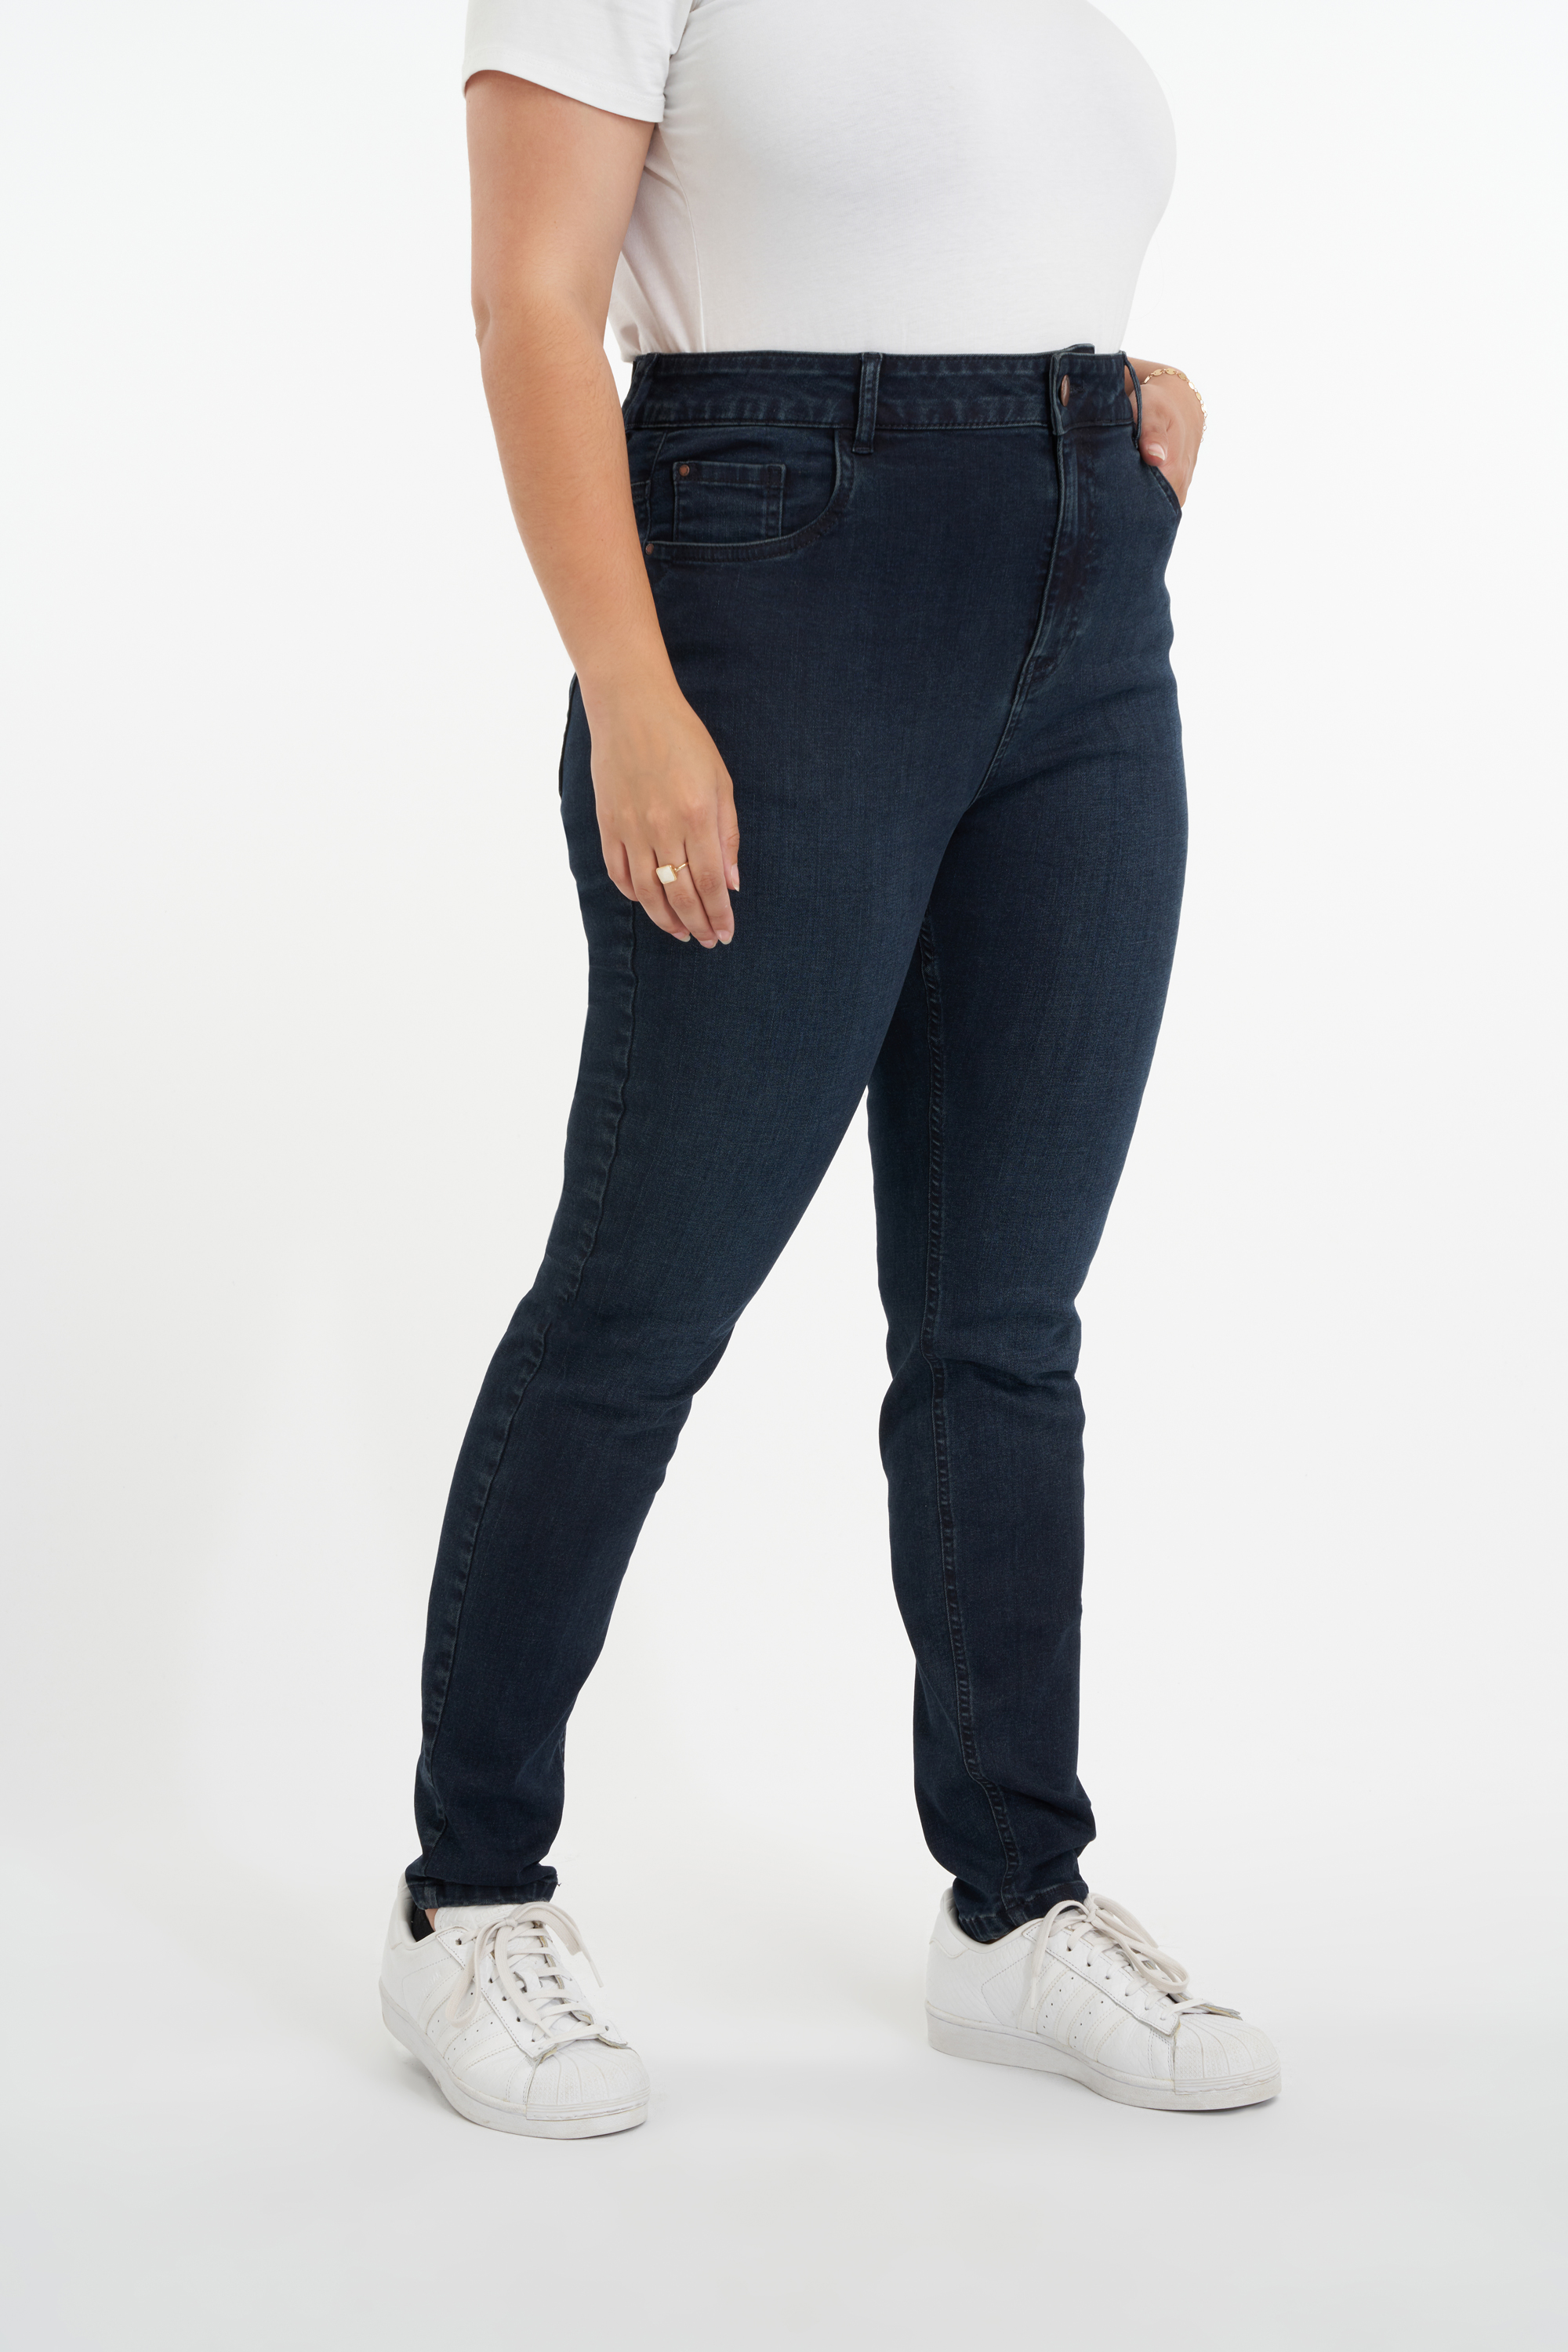 Skinny leg high waist CHERRY jeans image 4